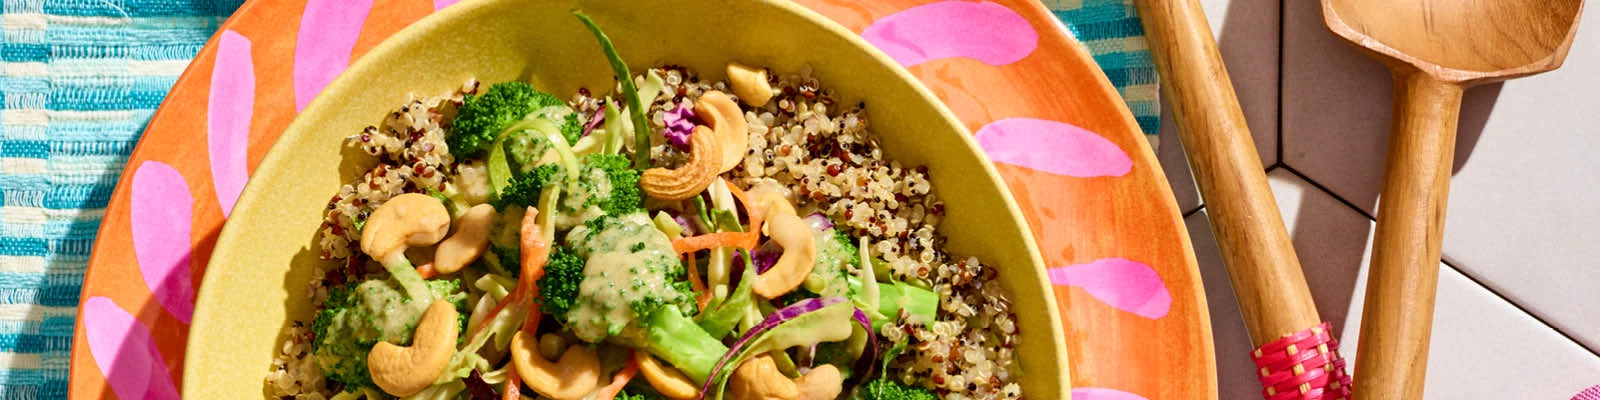 Broccoli and Quinoa Salad with Tahini-Lemon Dressing